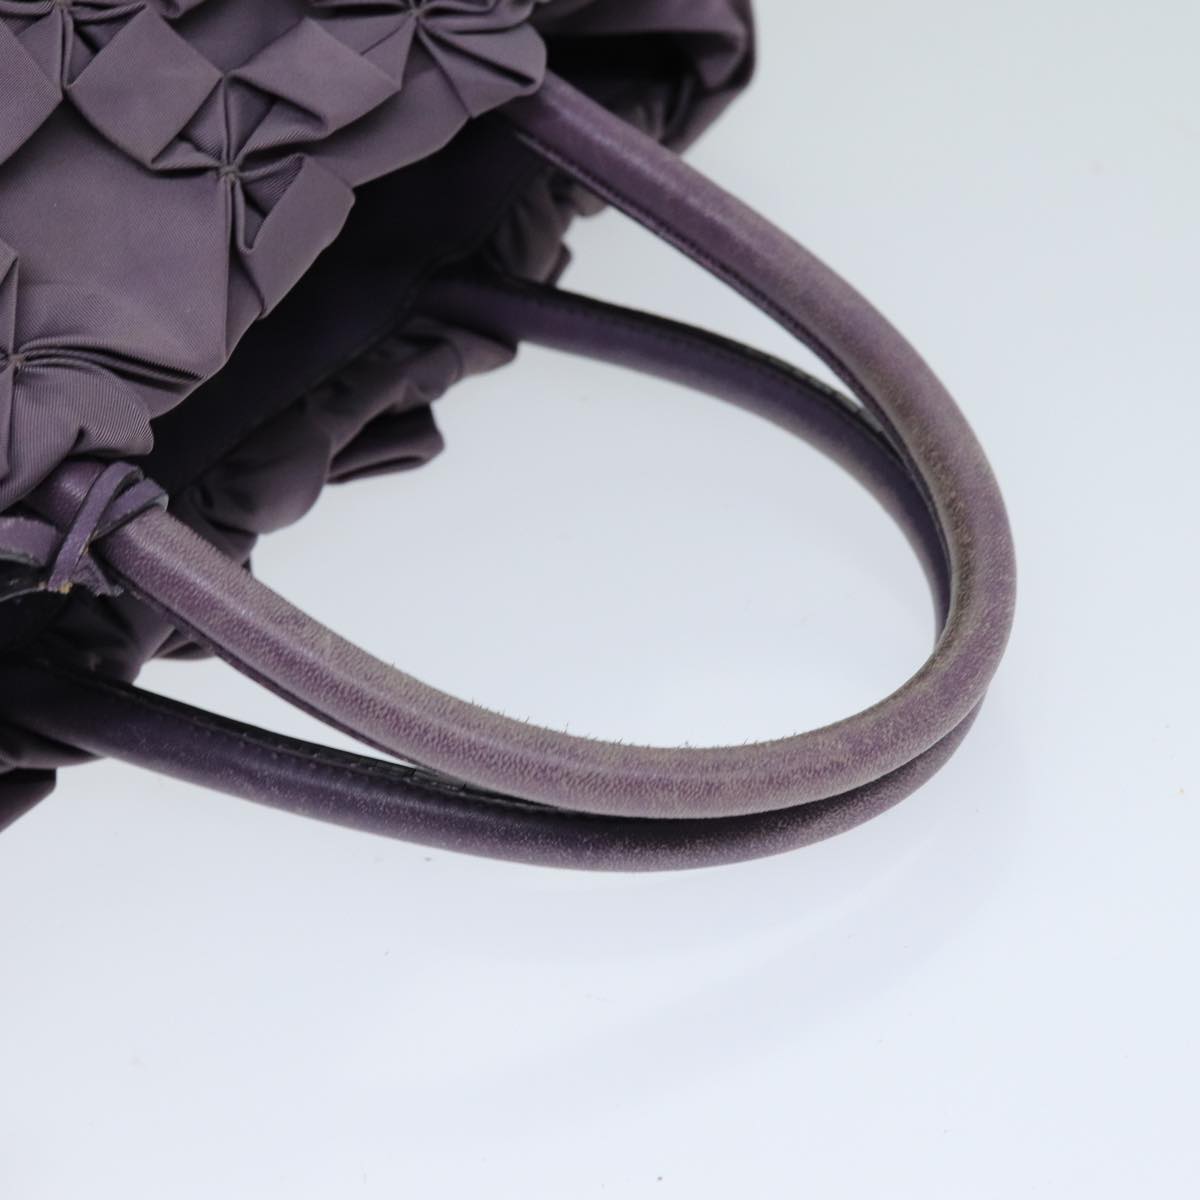 PRADA Hand Bag Nylon Purple Auth 75585